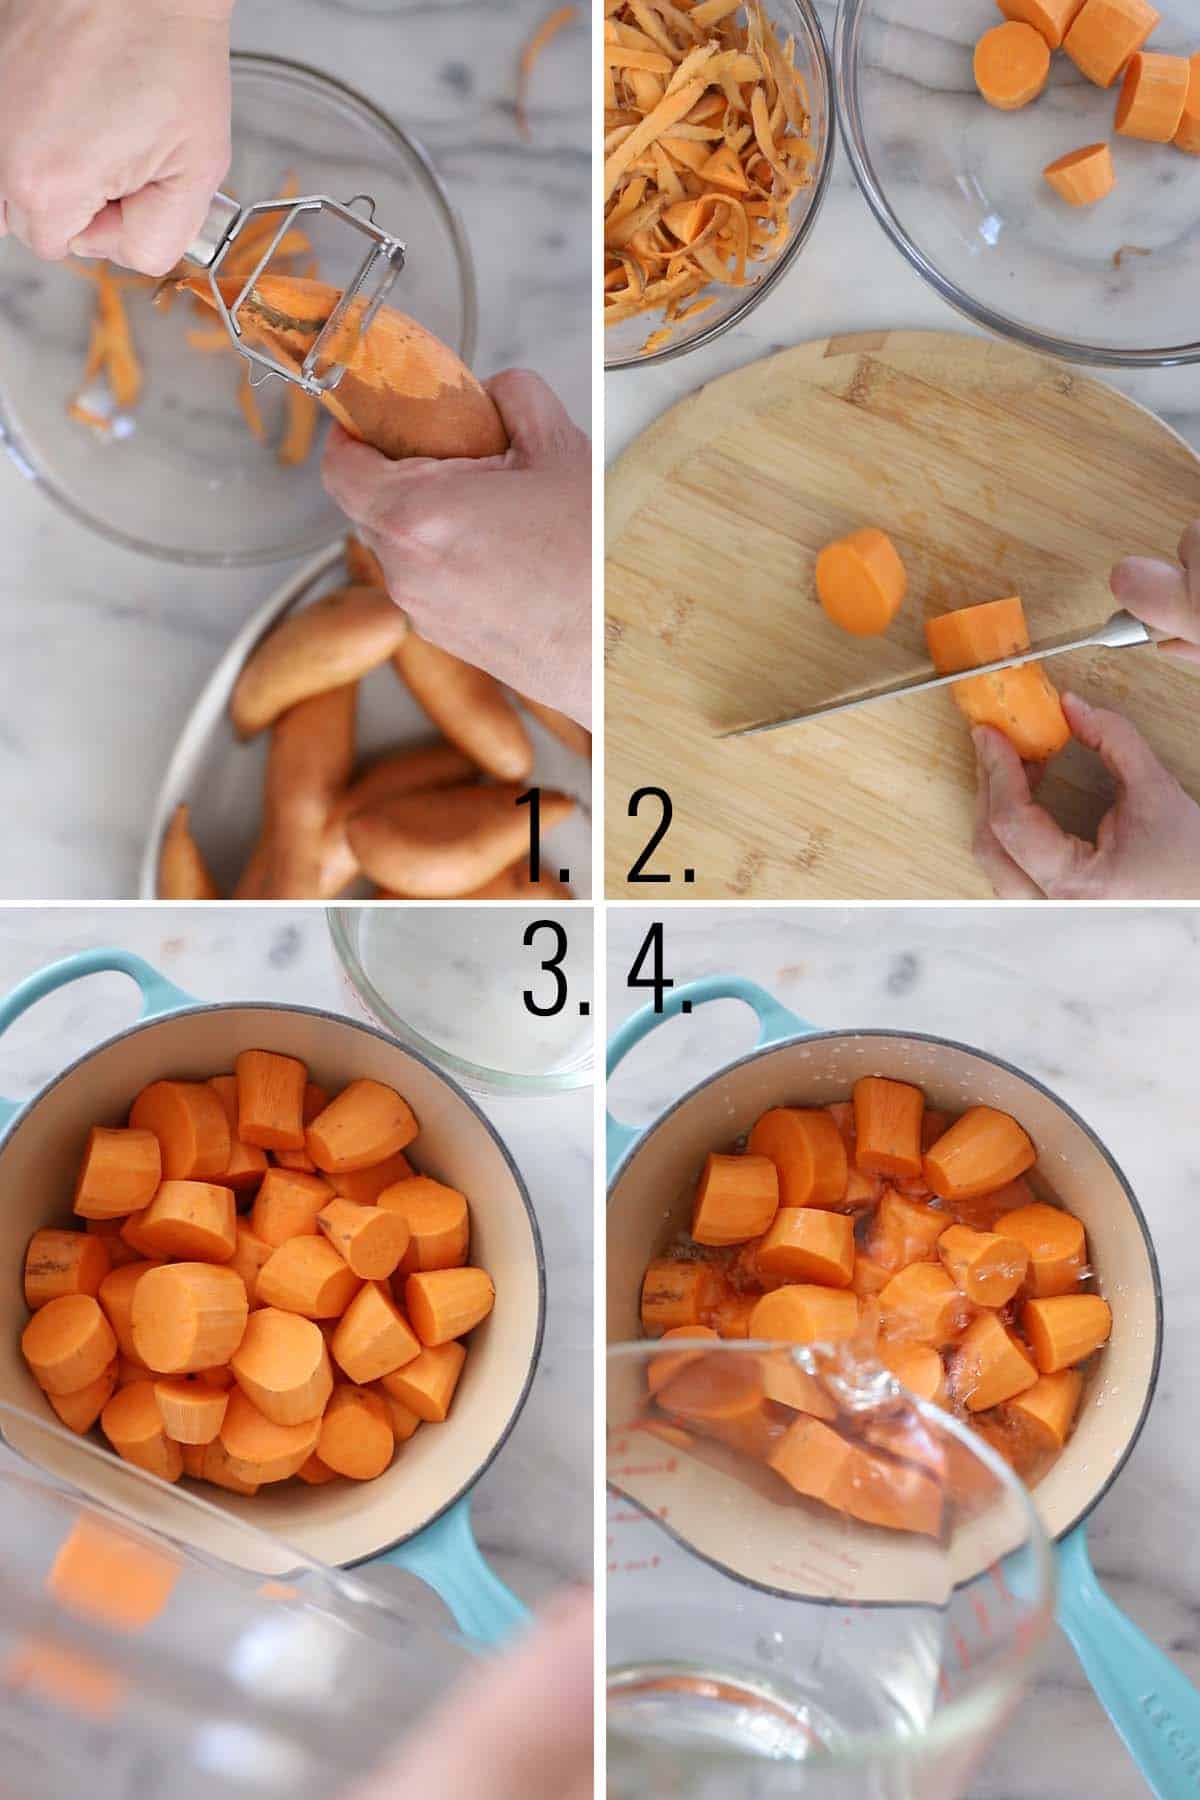 How to prepare to make sweet potato casserole.